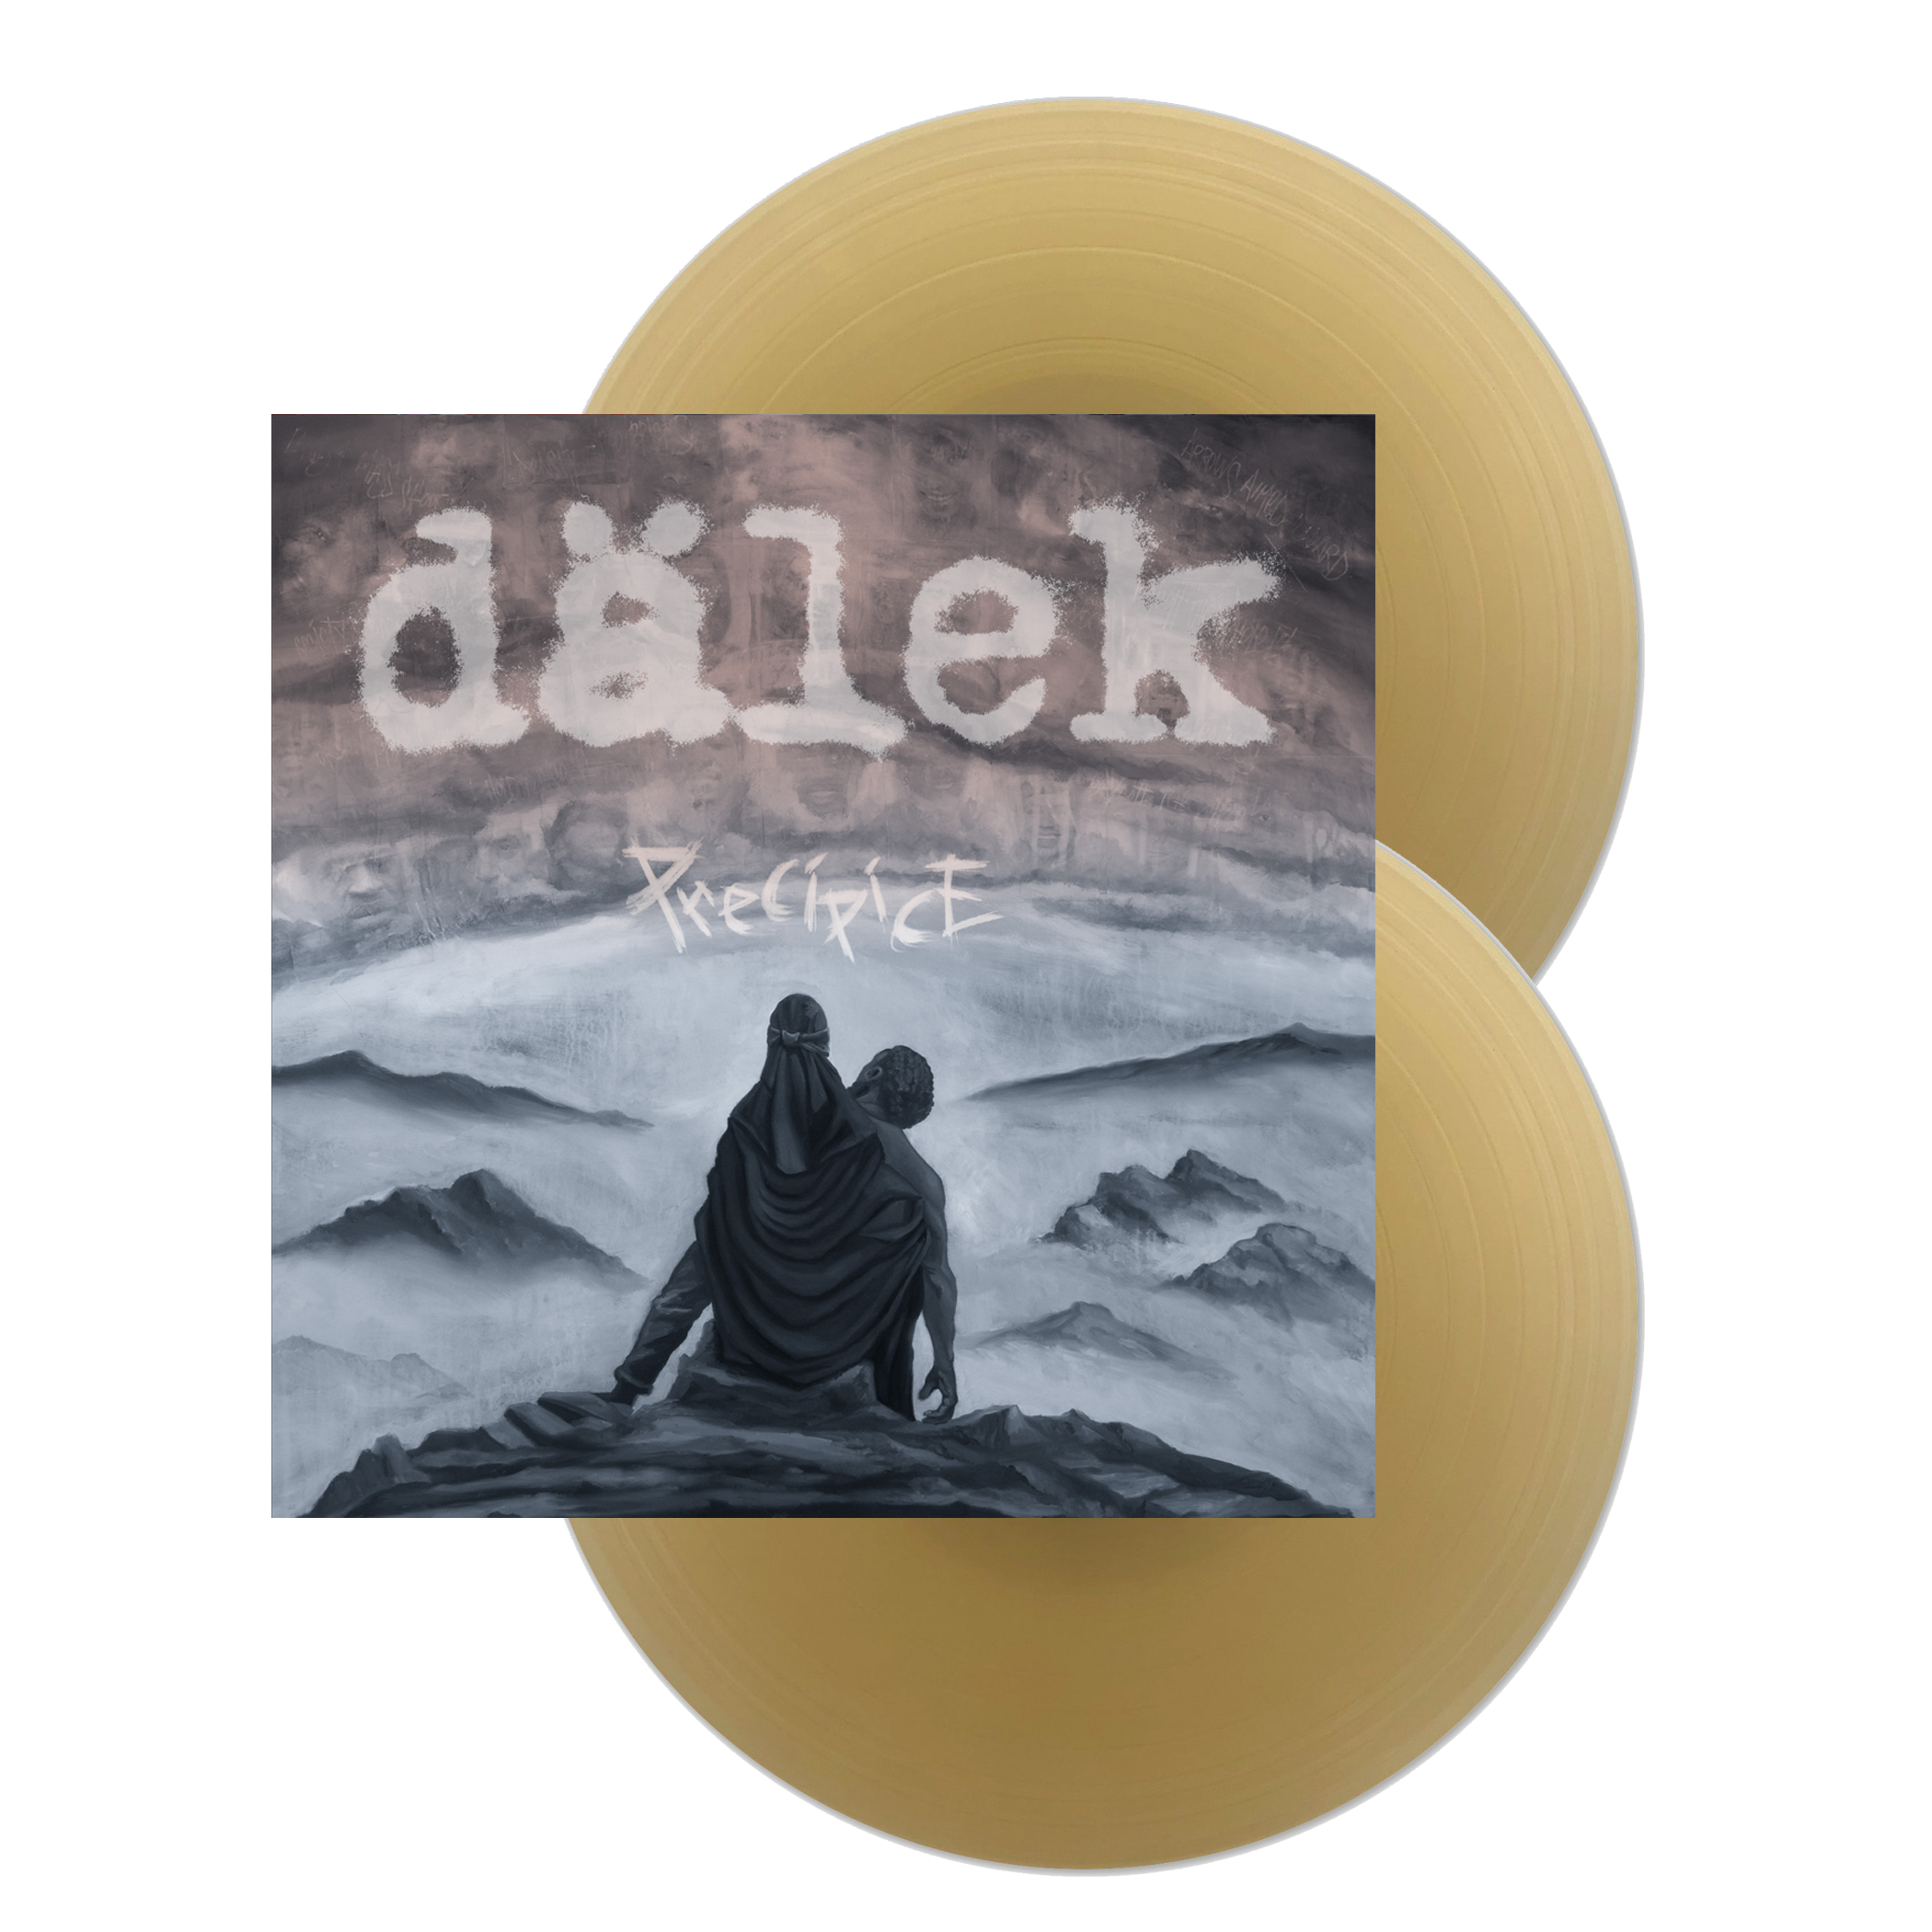 Dalek - Precipice [Gold Vinyl]